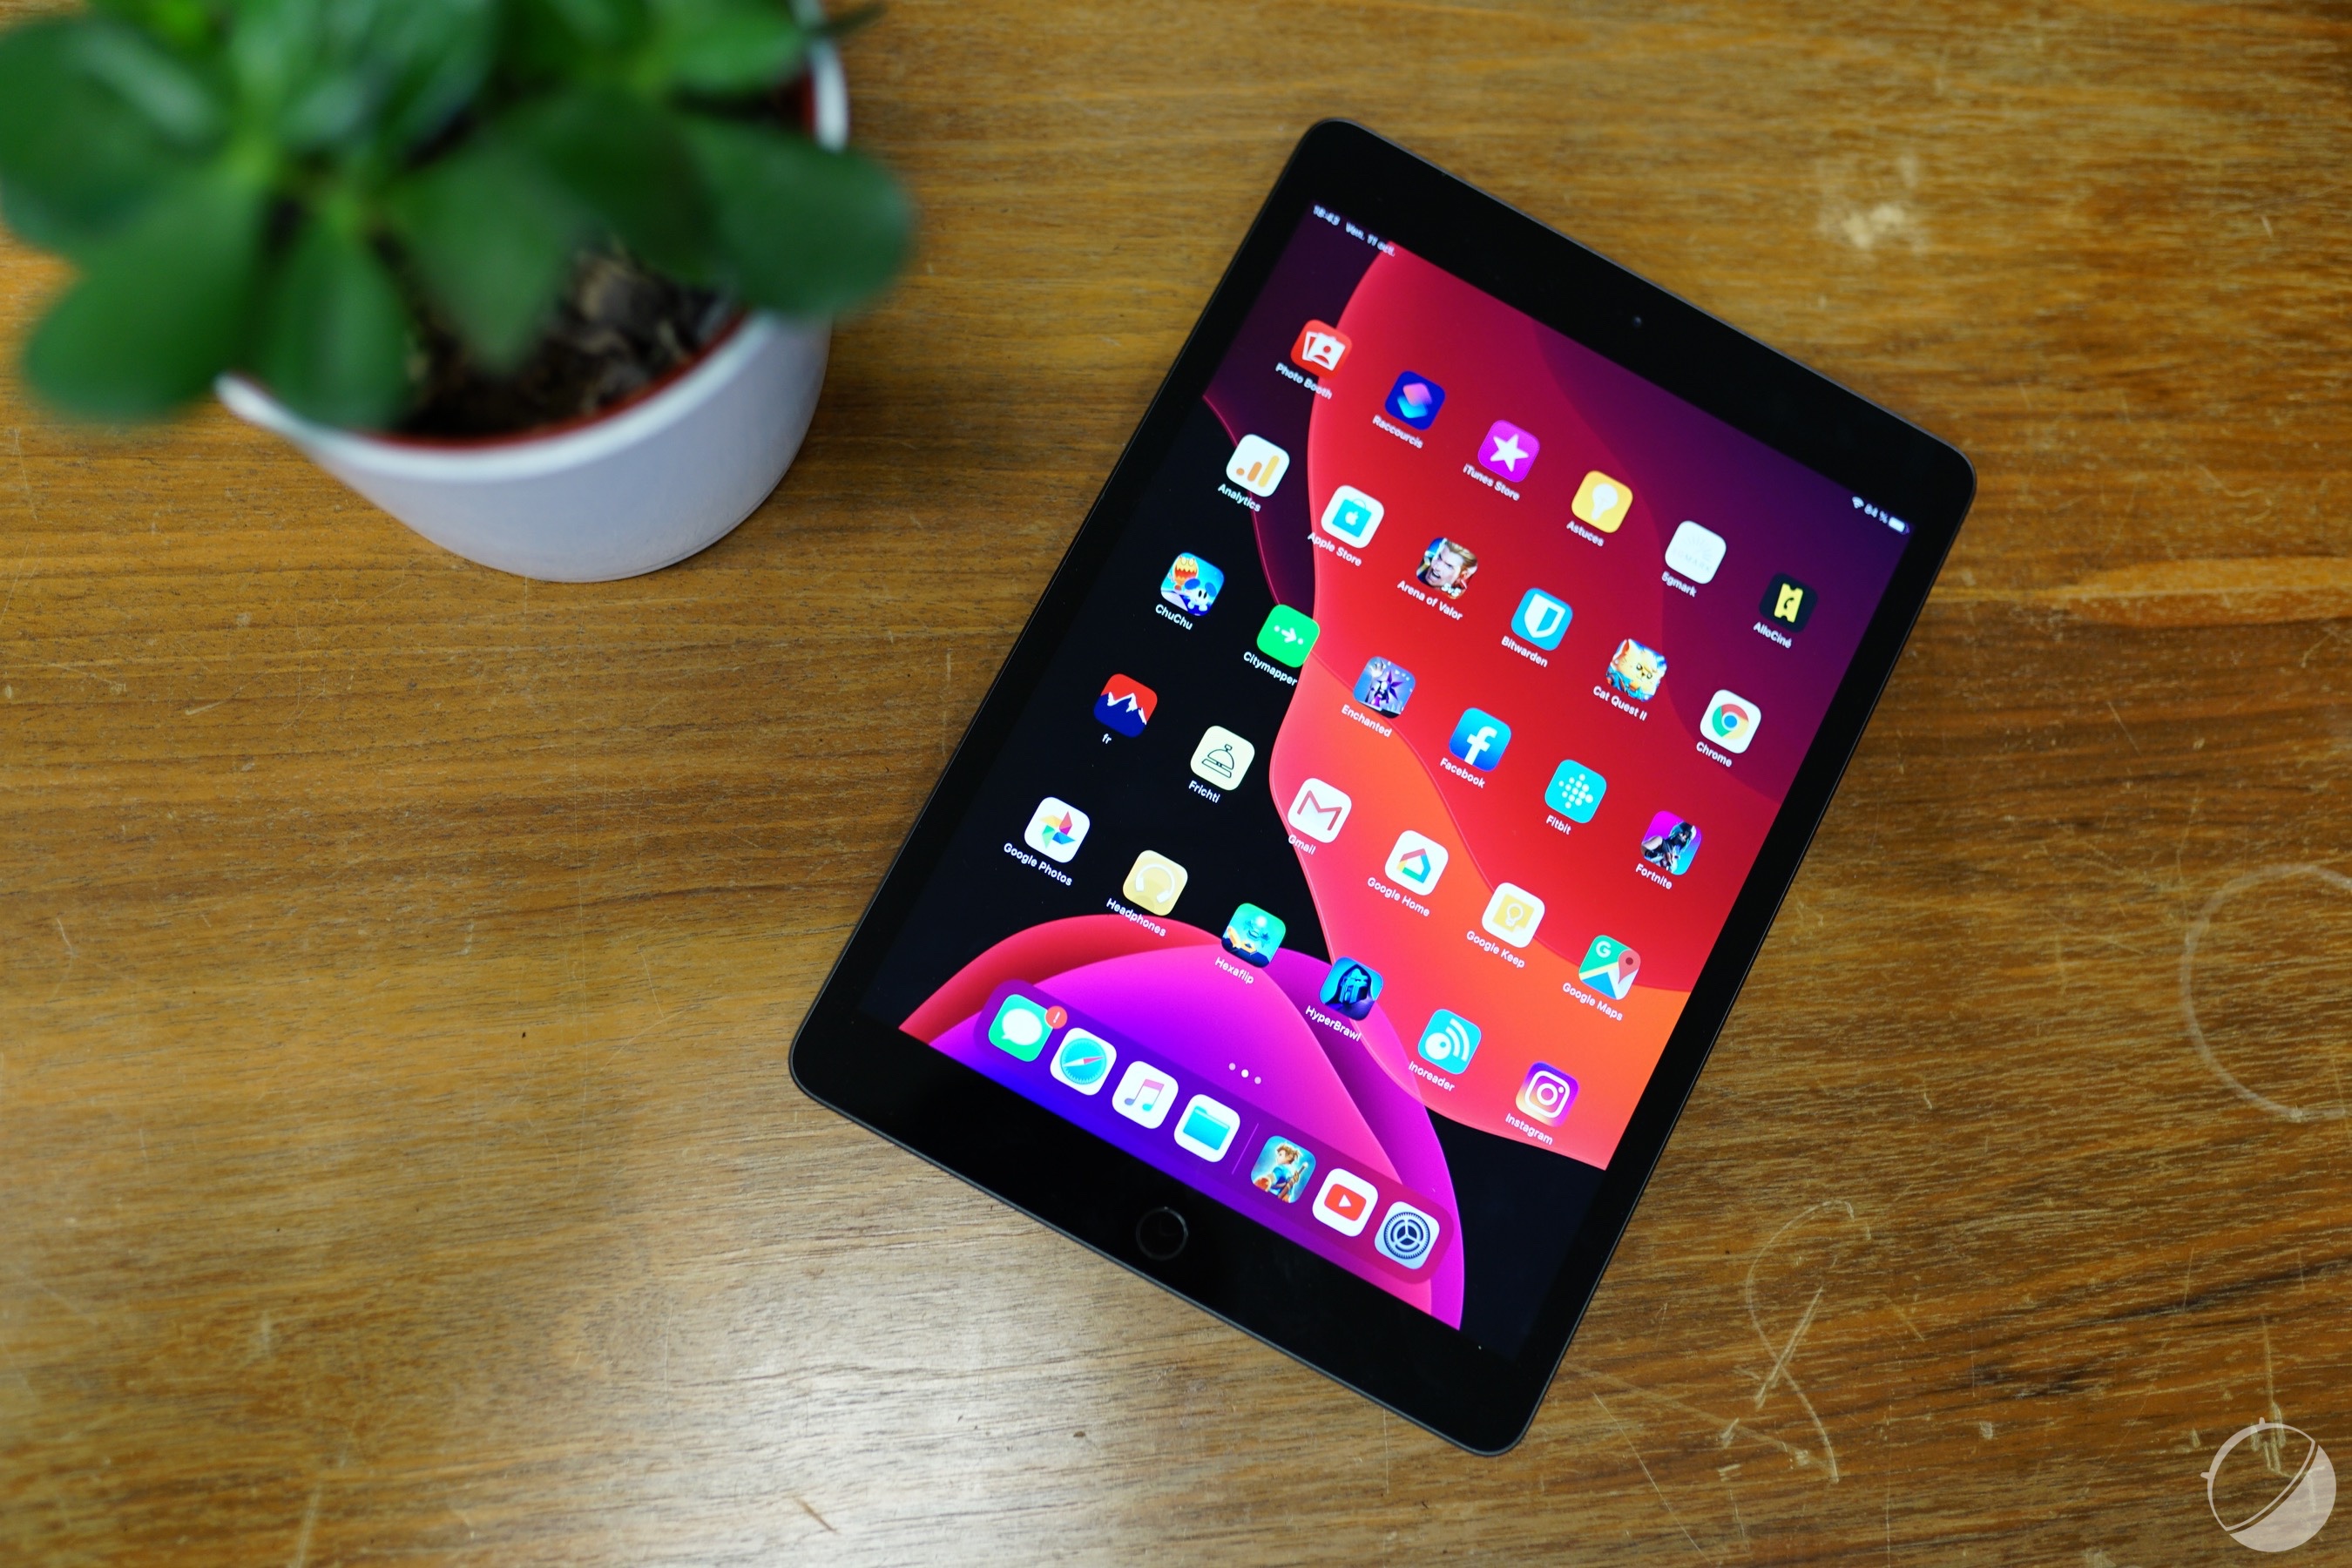 iPad 32GO Occasion Acheter son iPad pas cher sur internet